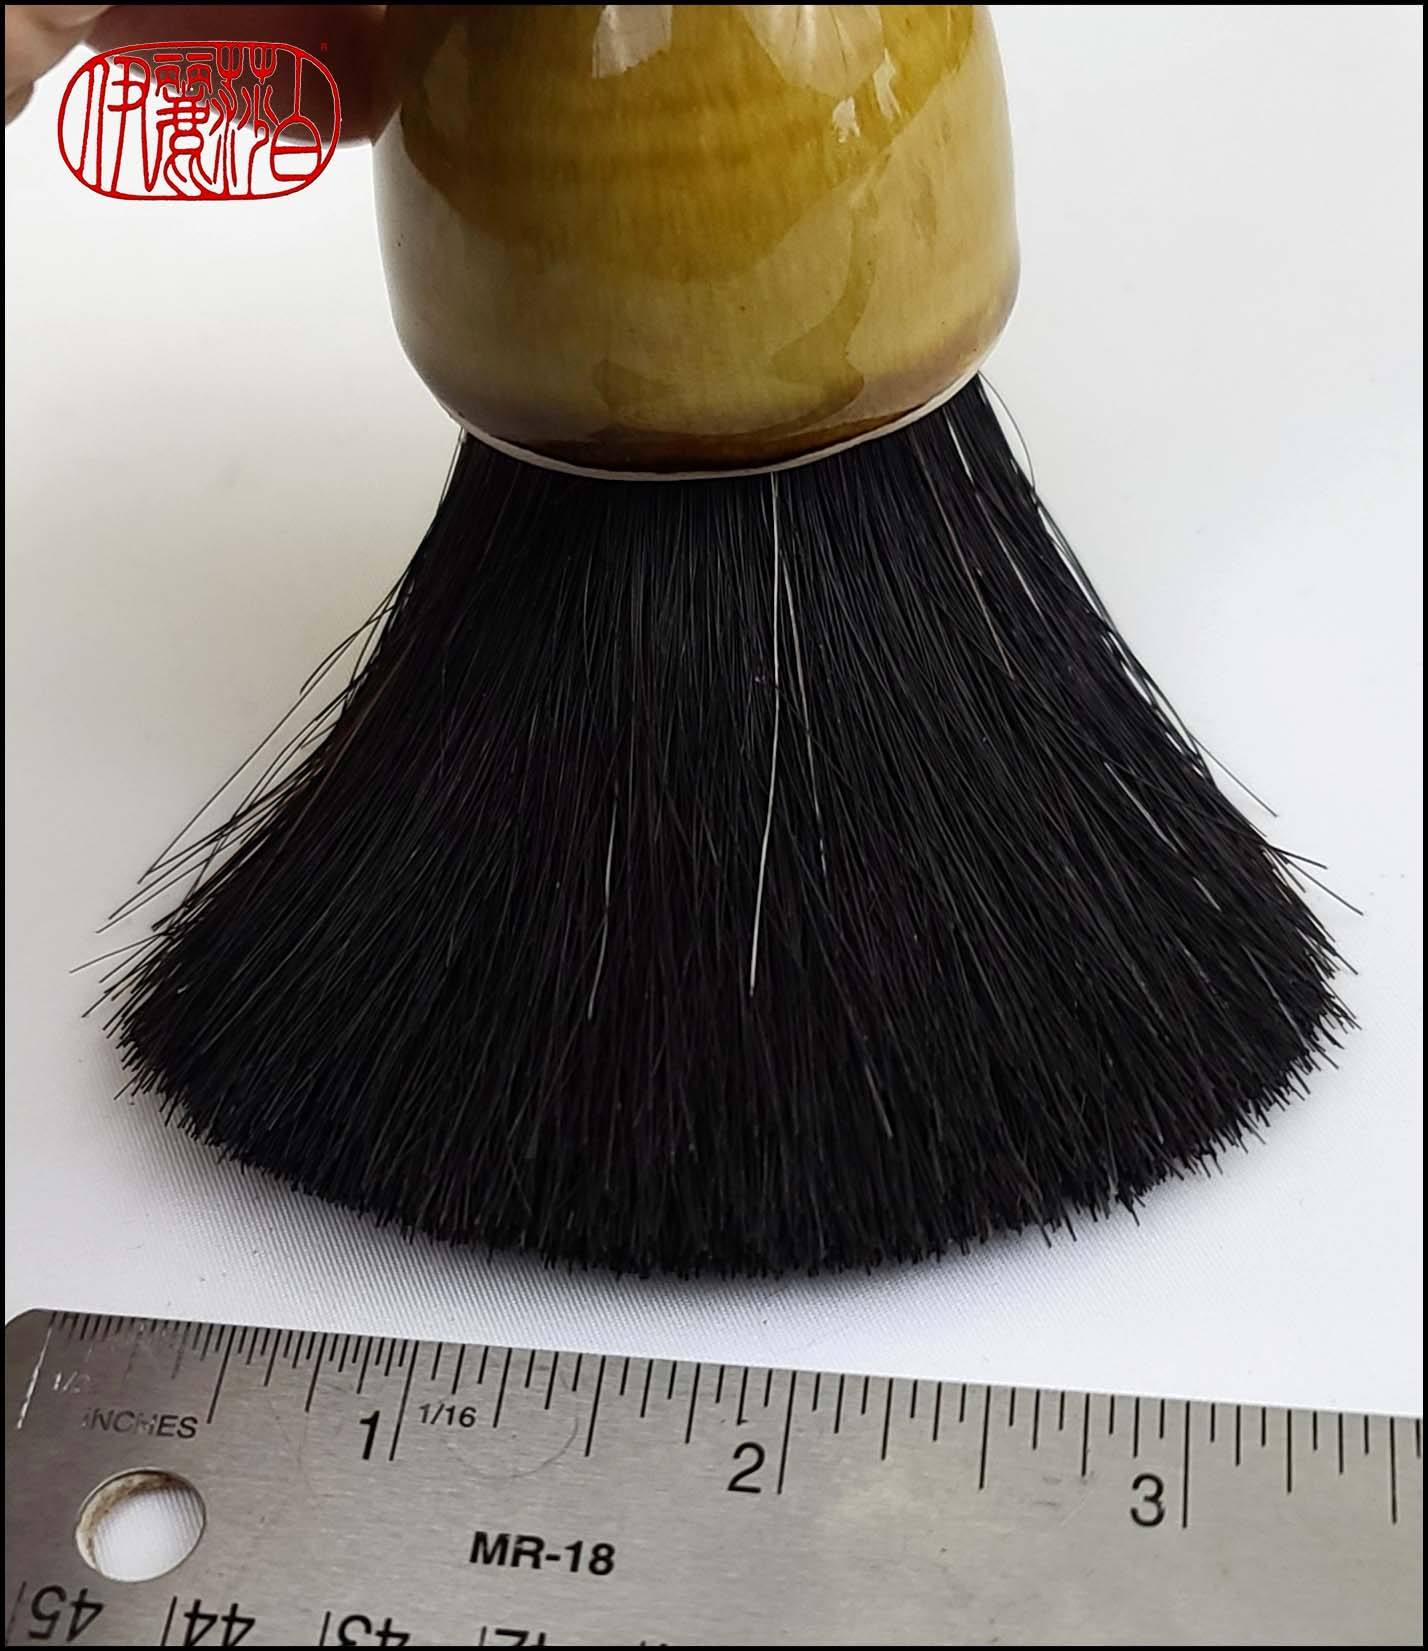 Coarse Black Horsehair Paint Brush with Bamboo Handle Art Supplies Elizabeth Schowachert Art